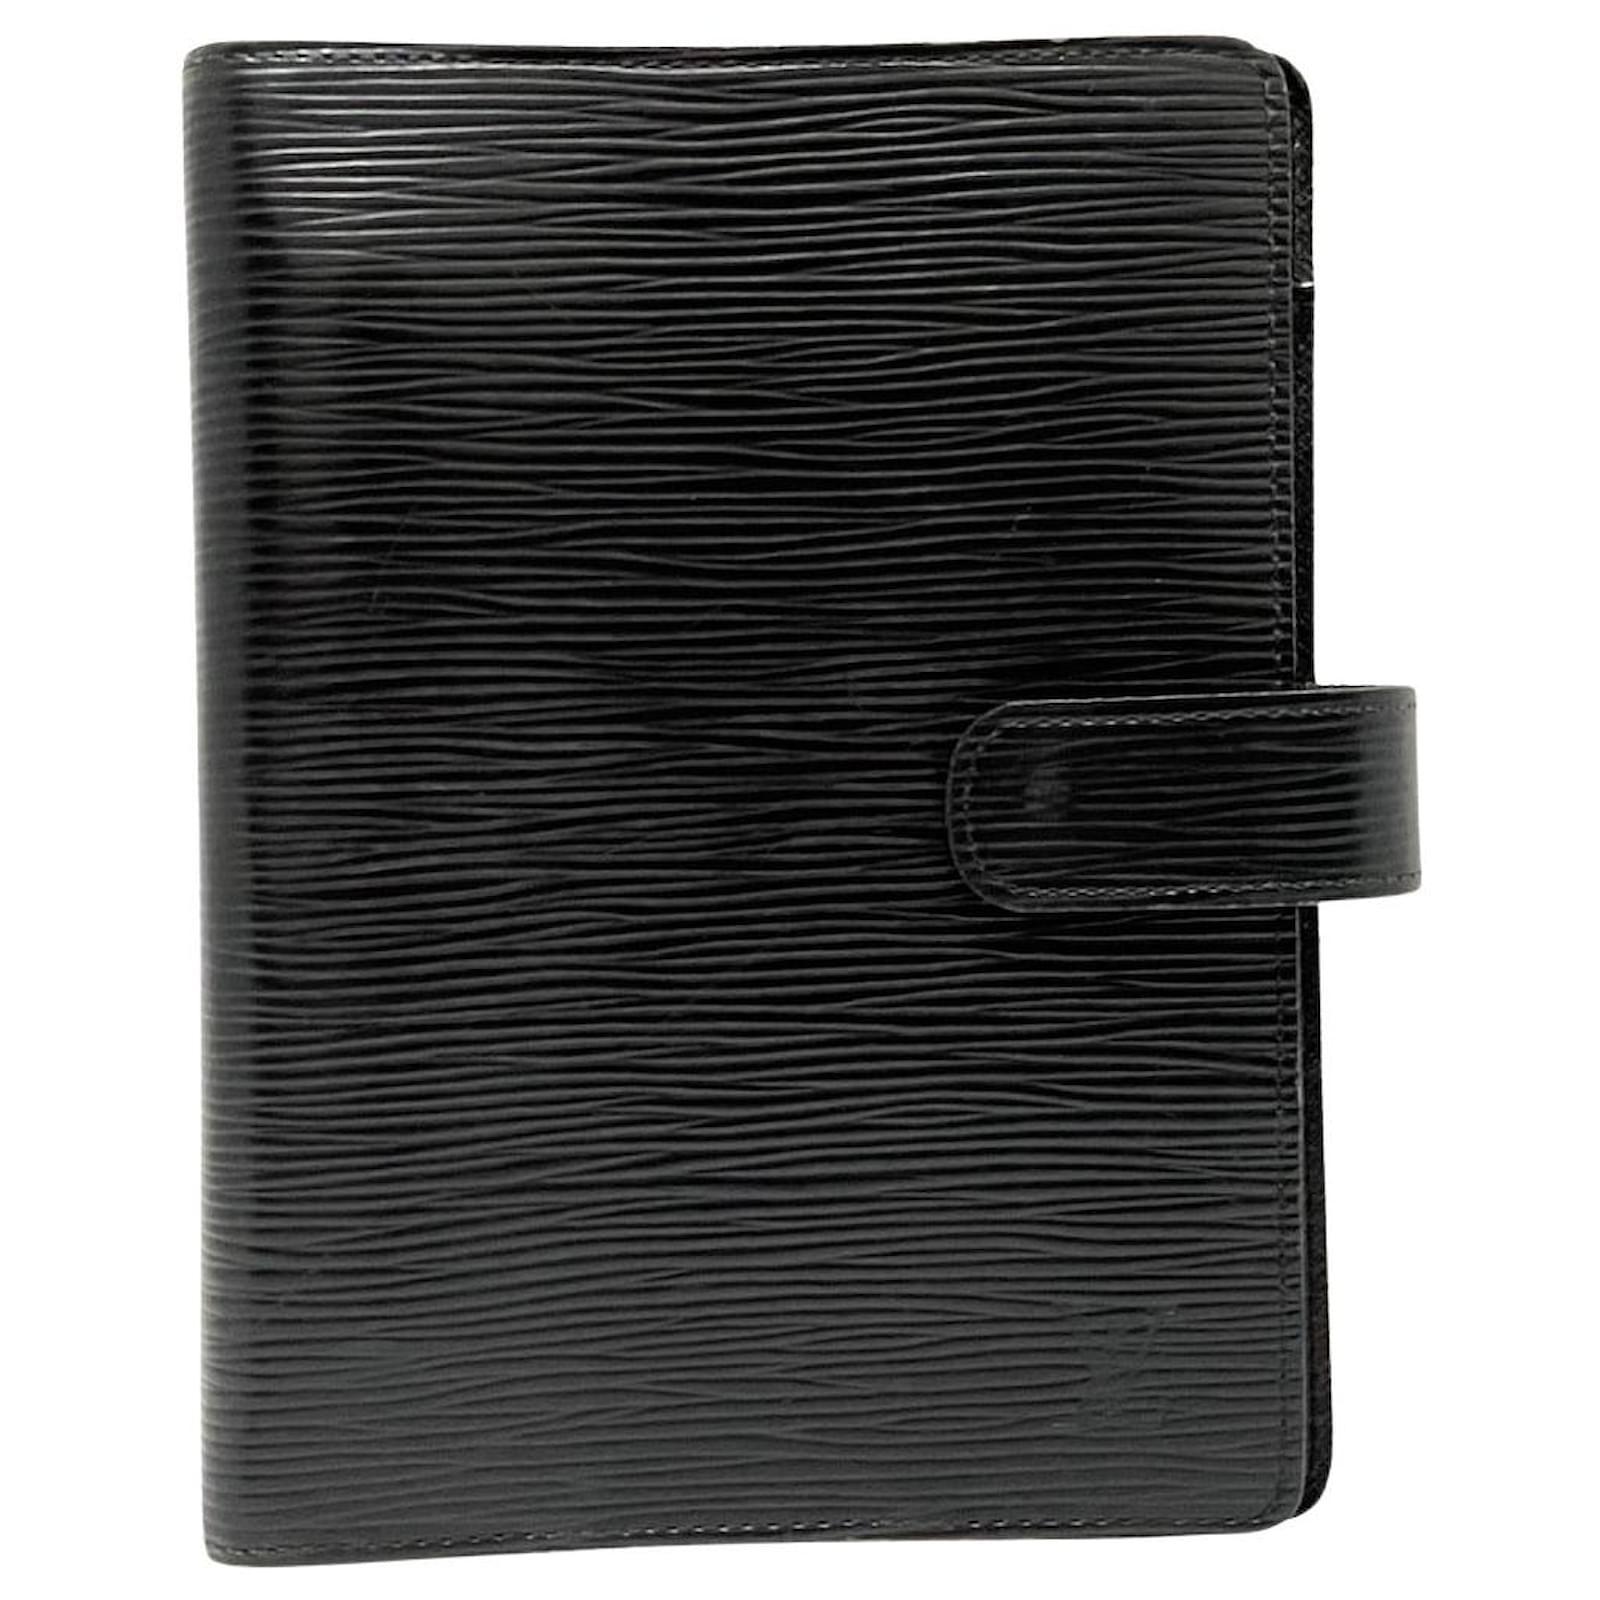 Louis Vuitton Black Murakami Agenda PM (CA0034) – Luxury Leather Guys